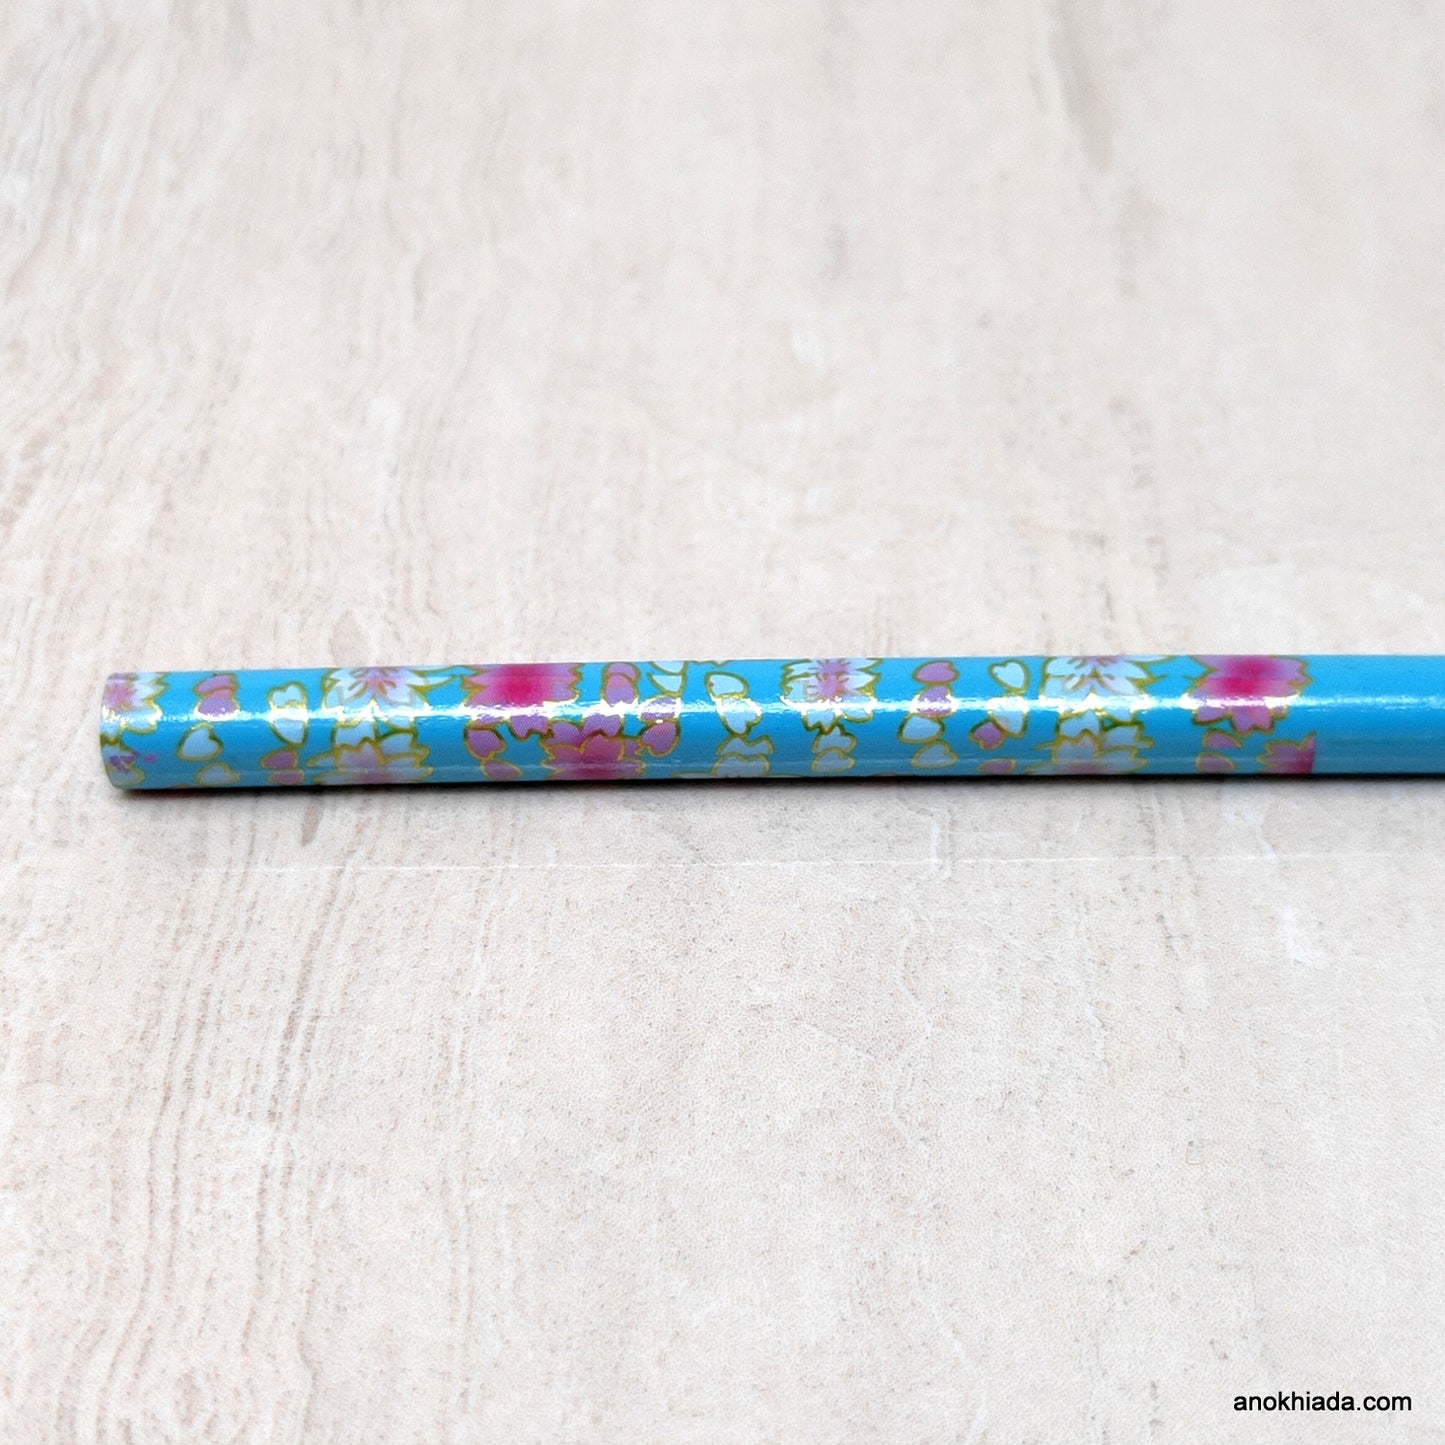 Flower Print Blue Wooden Juda Stick/Bun Stick - (99-05B Juda Stick)